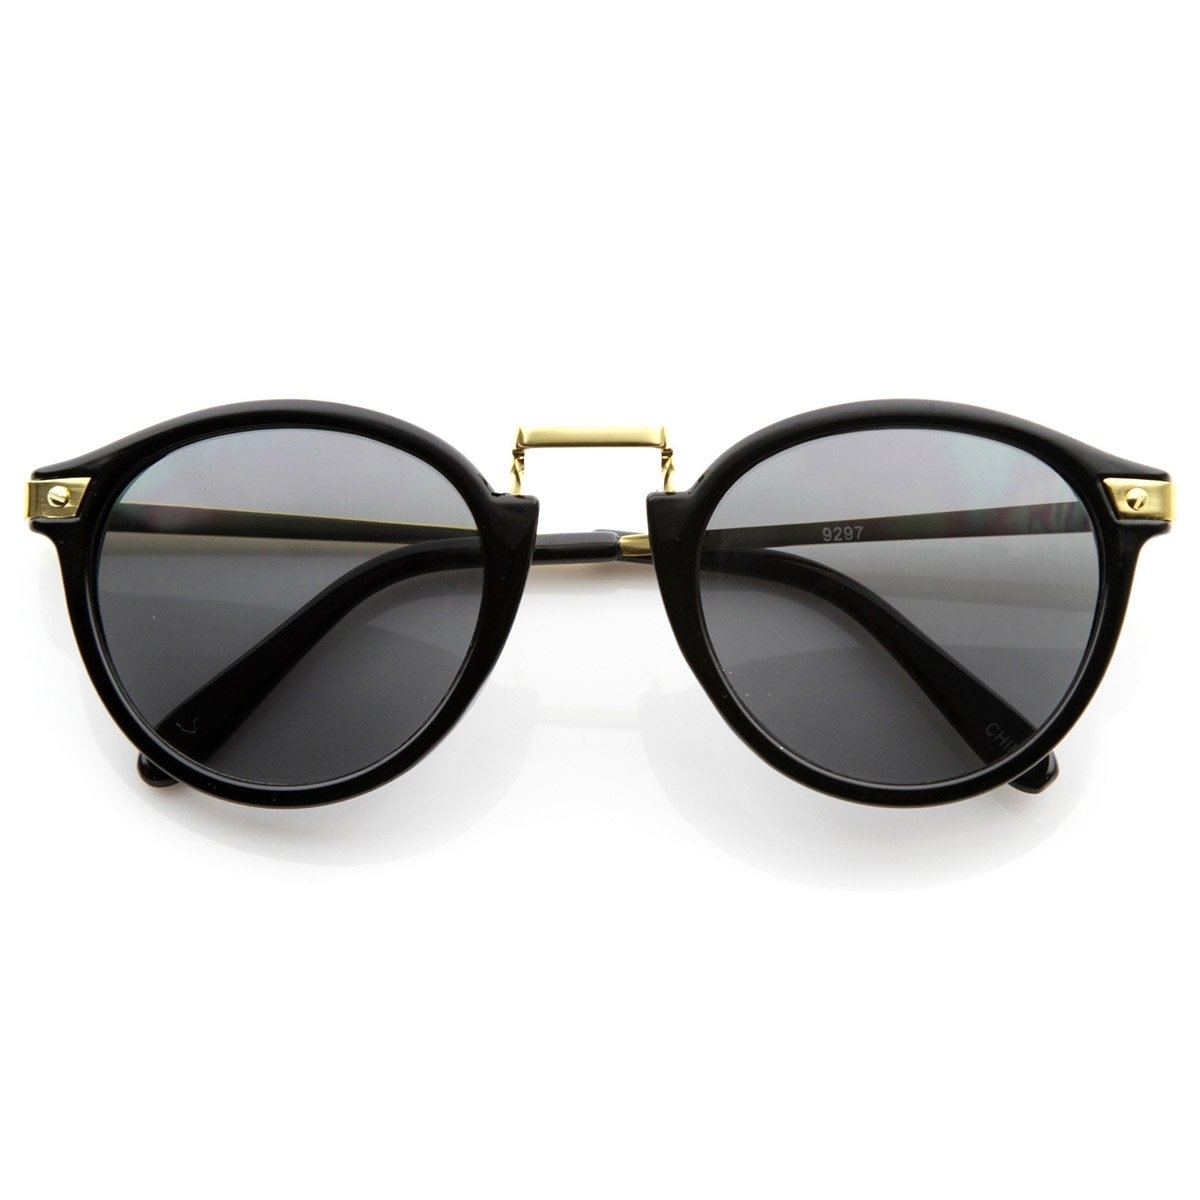 Vintage Inspired Round Horned Rim P-3 Frame Retro Sunglasses - Blue Plum